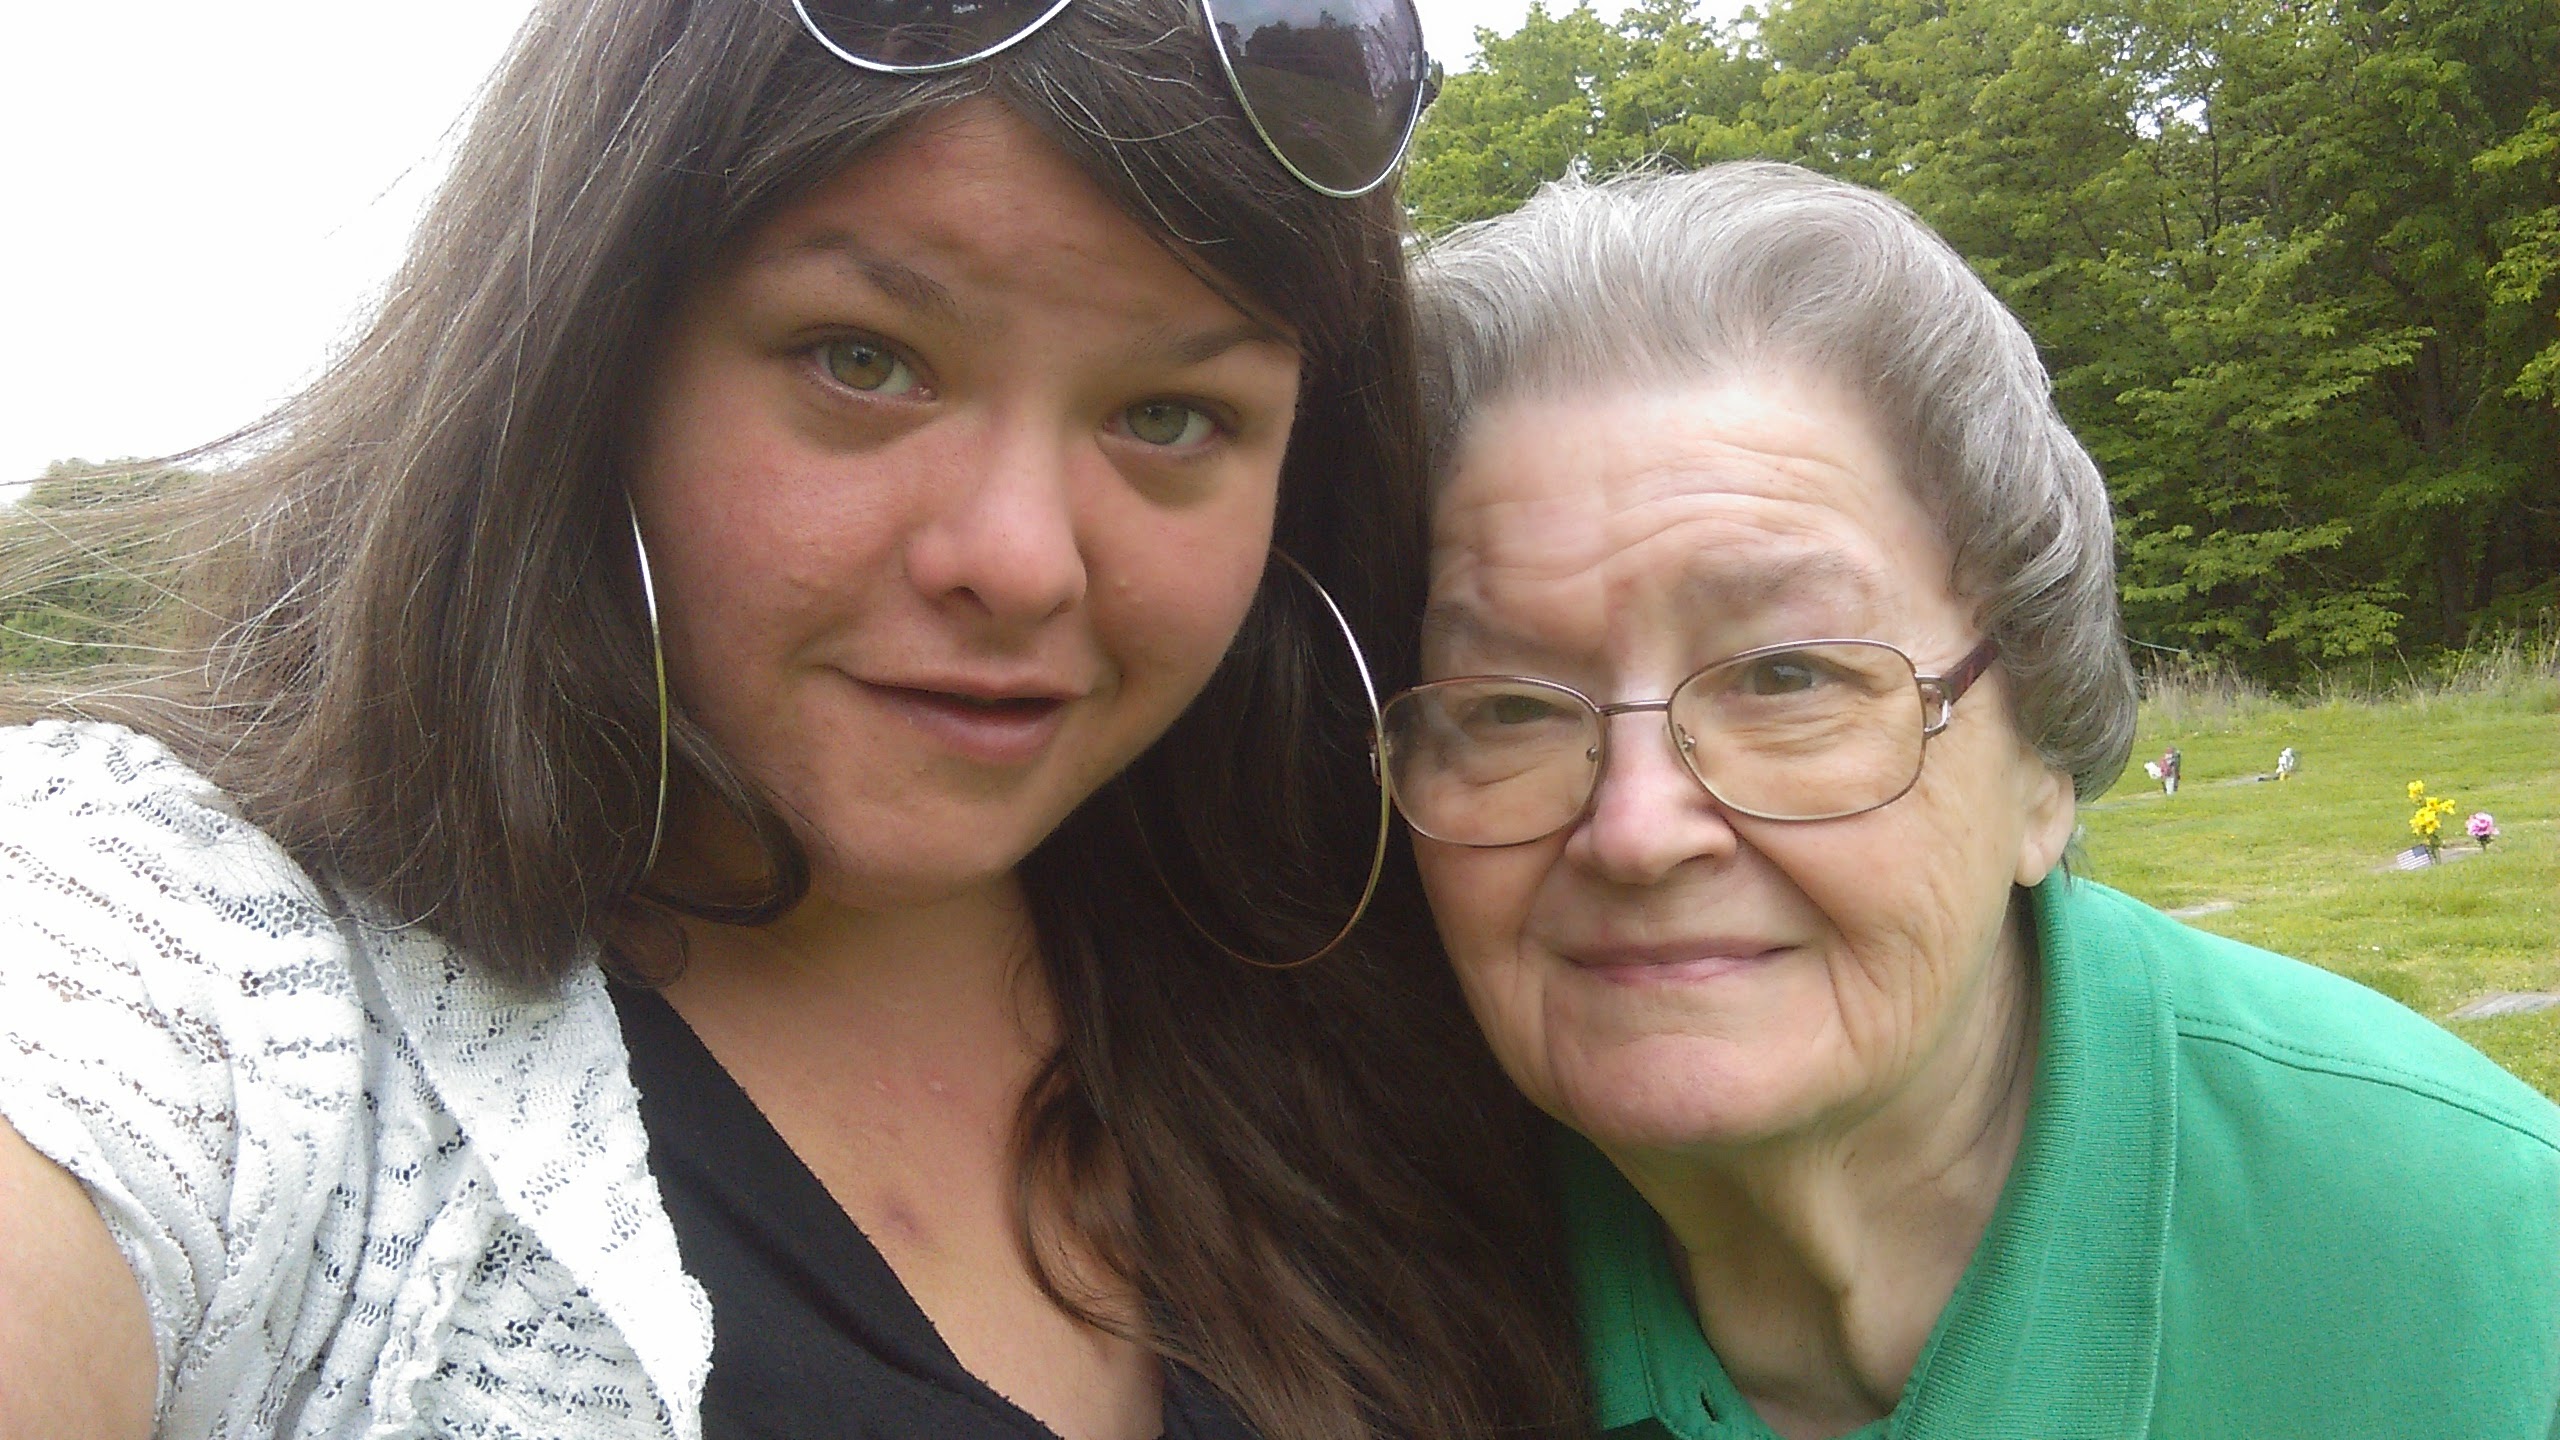 Photo: Rachel and her grandmother recently